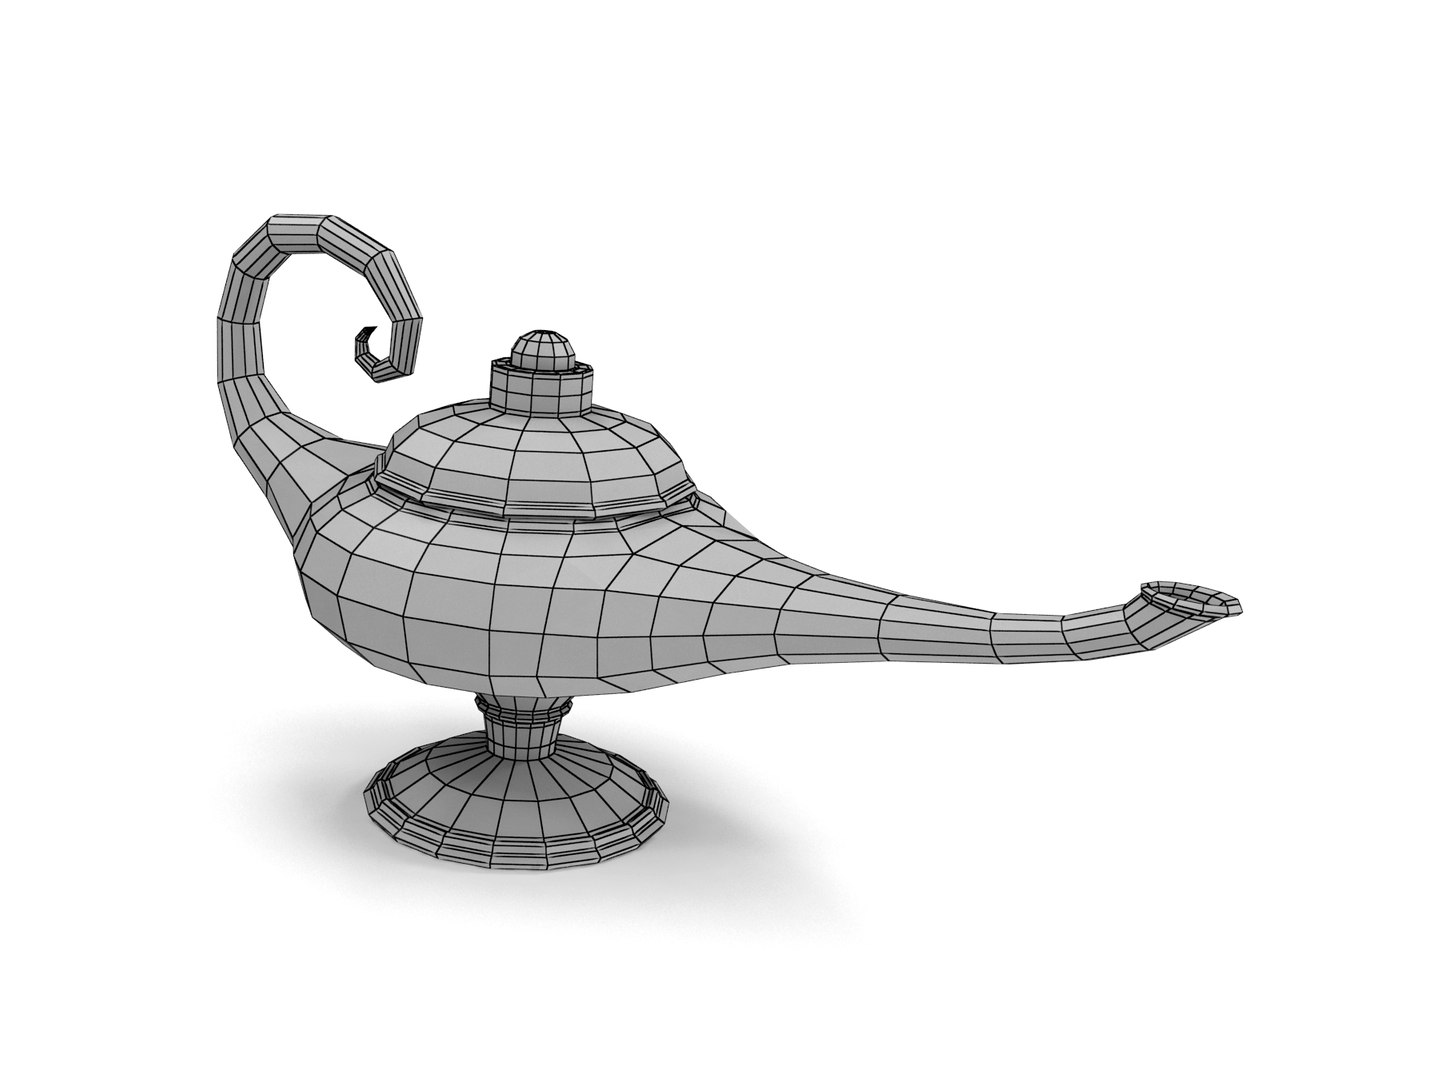 Disney Aladdin 3D Model - TurboSquid 1660725